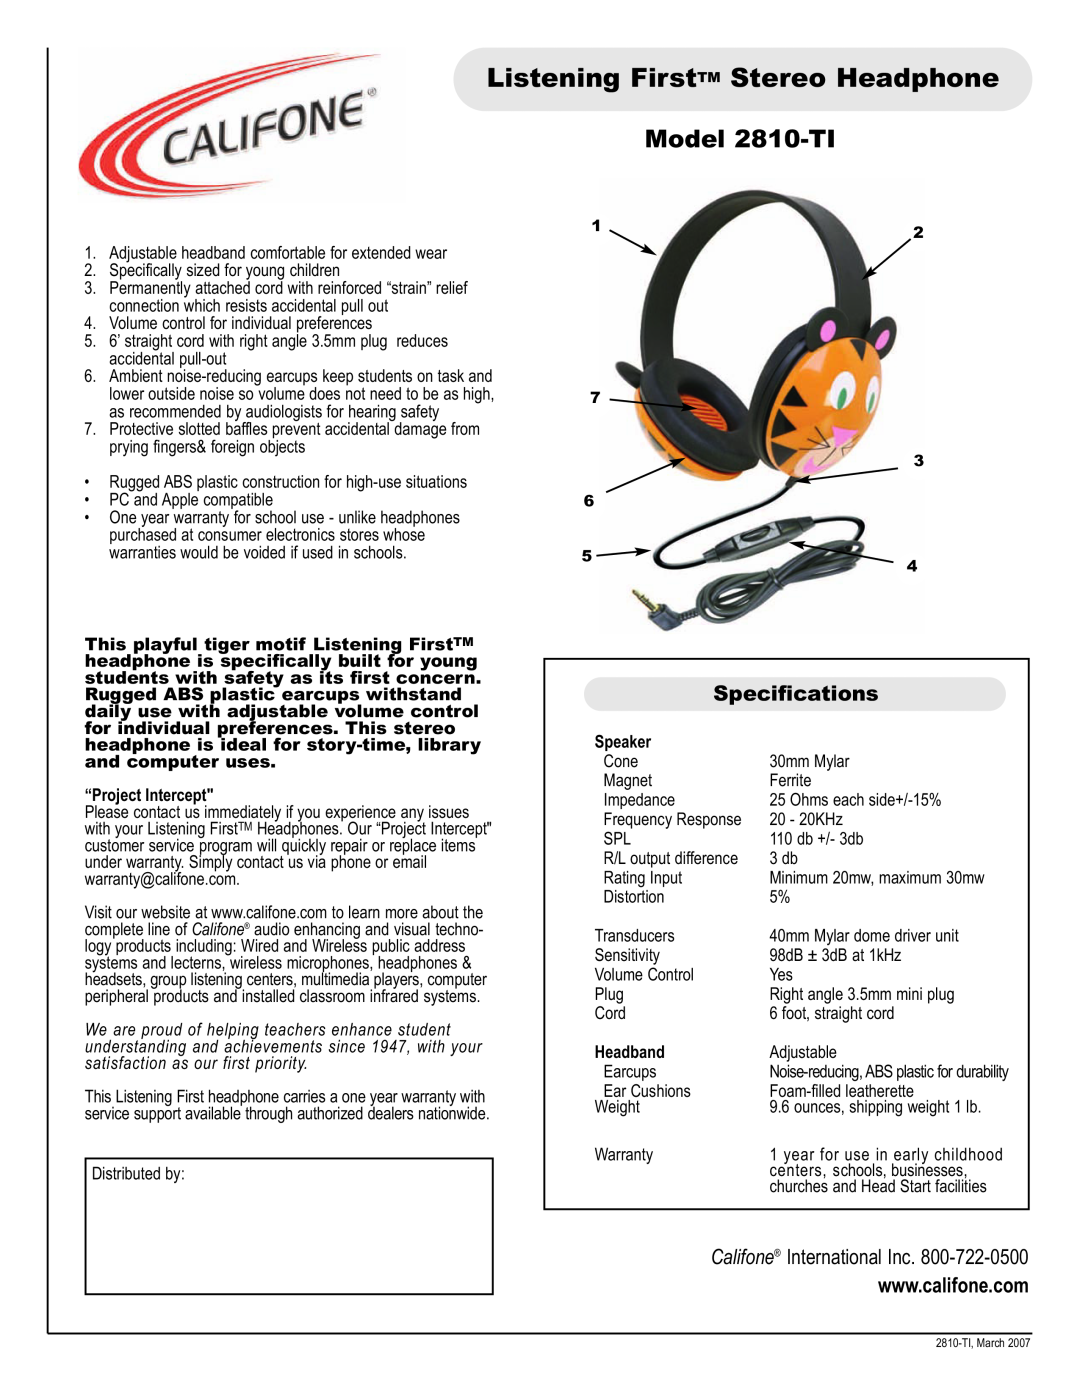 Califone specifications Listening FirstTM Stereo Headphone, Model 2810-TI, Specifications, Califone International Inc 